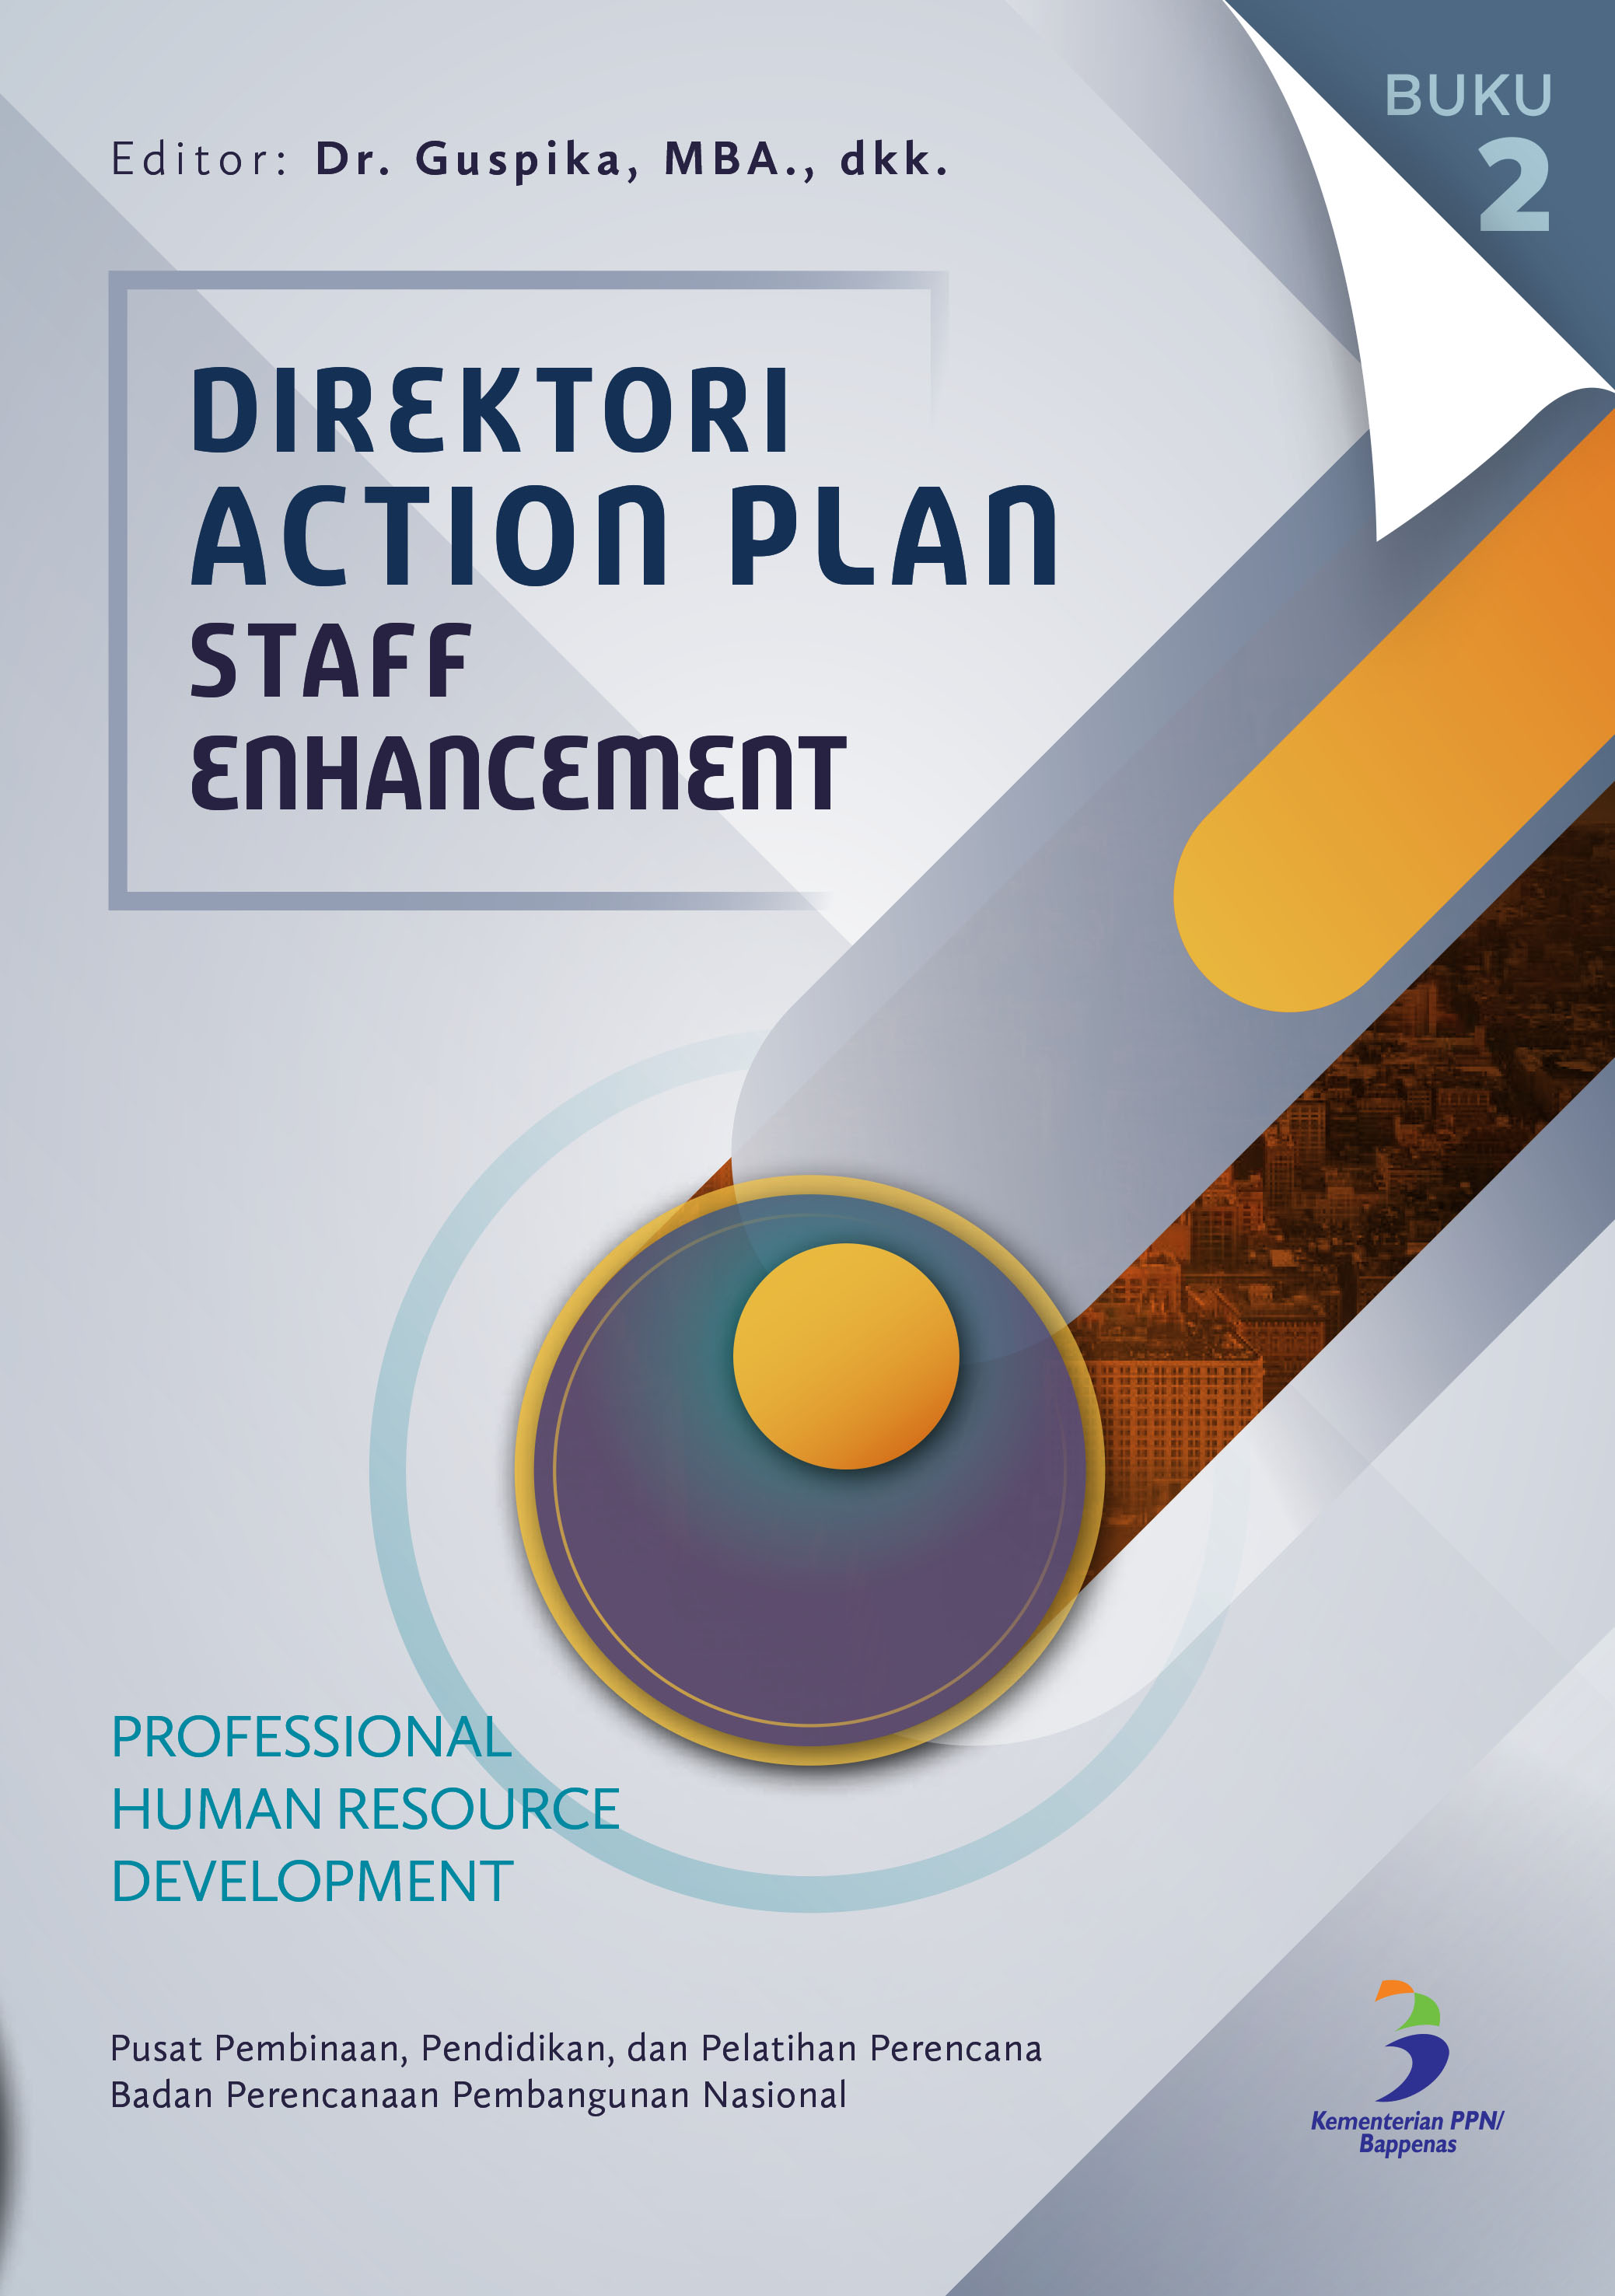 Buku 2 - Direktori Action Plan Pelatihan